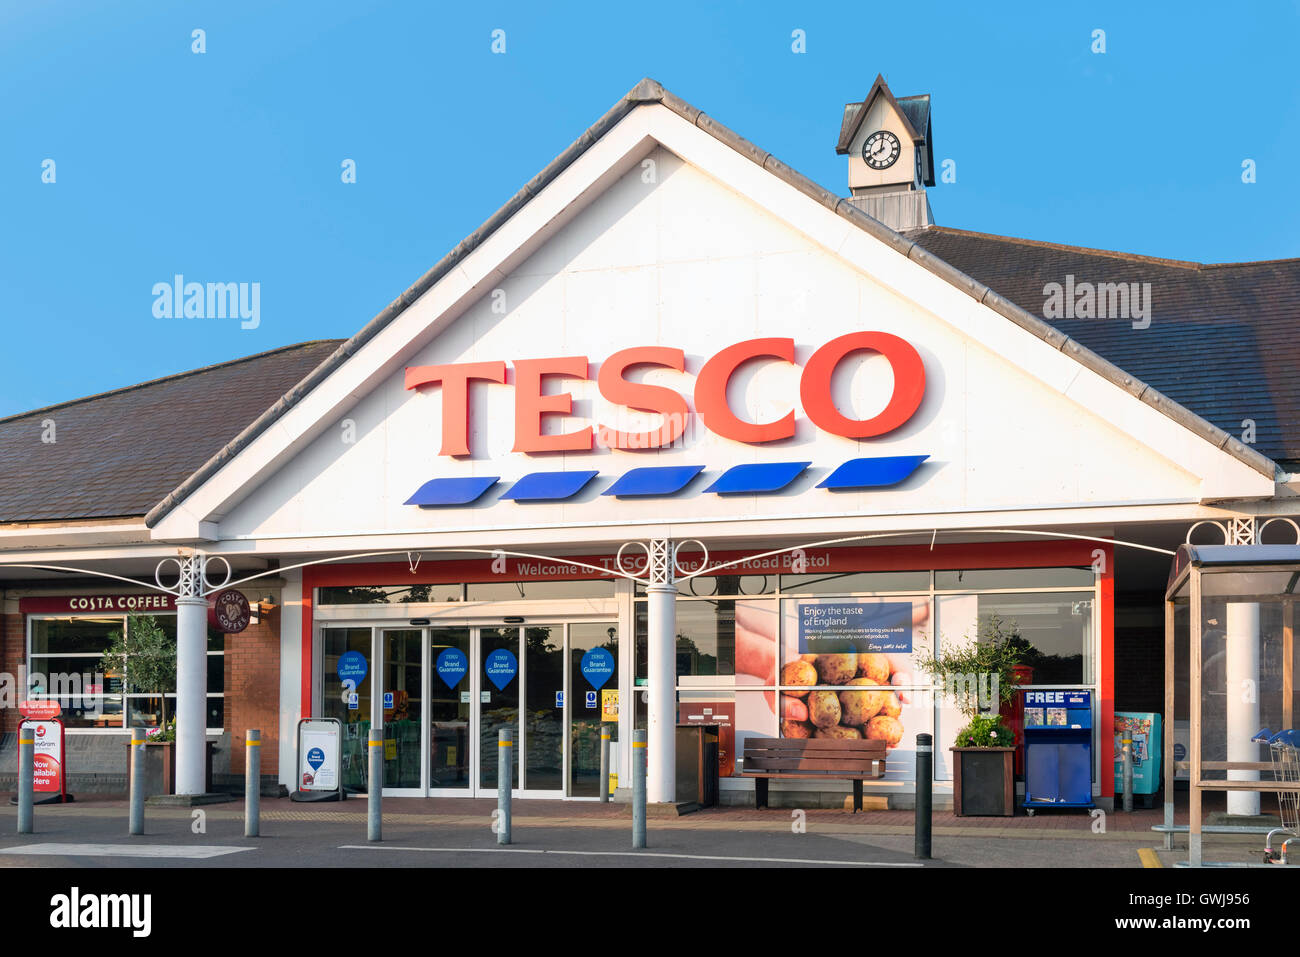 Tesco-Supermarkt, UK. Stockfoto